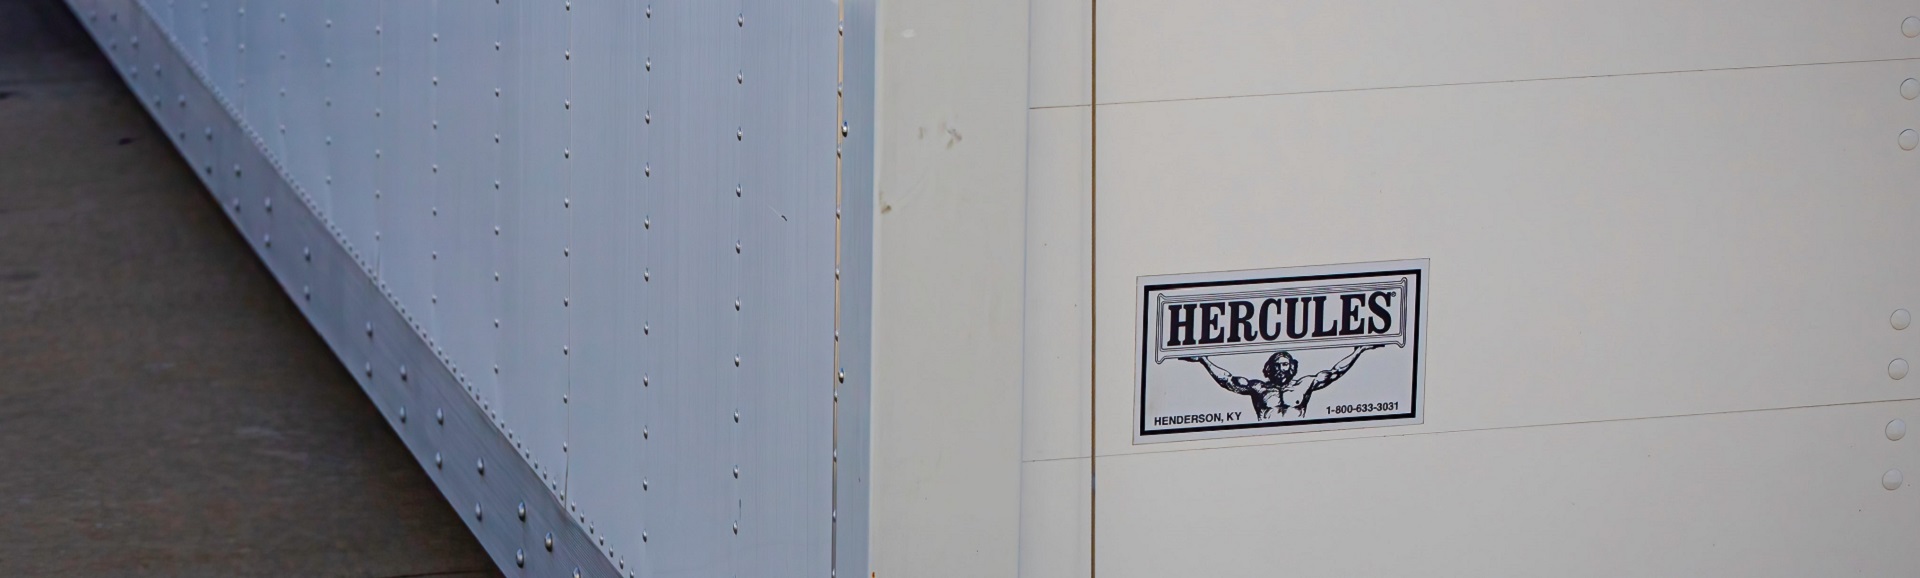 Hercules Truck Body Box Ready for Installation at W&B Service Company